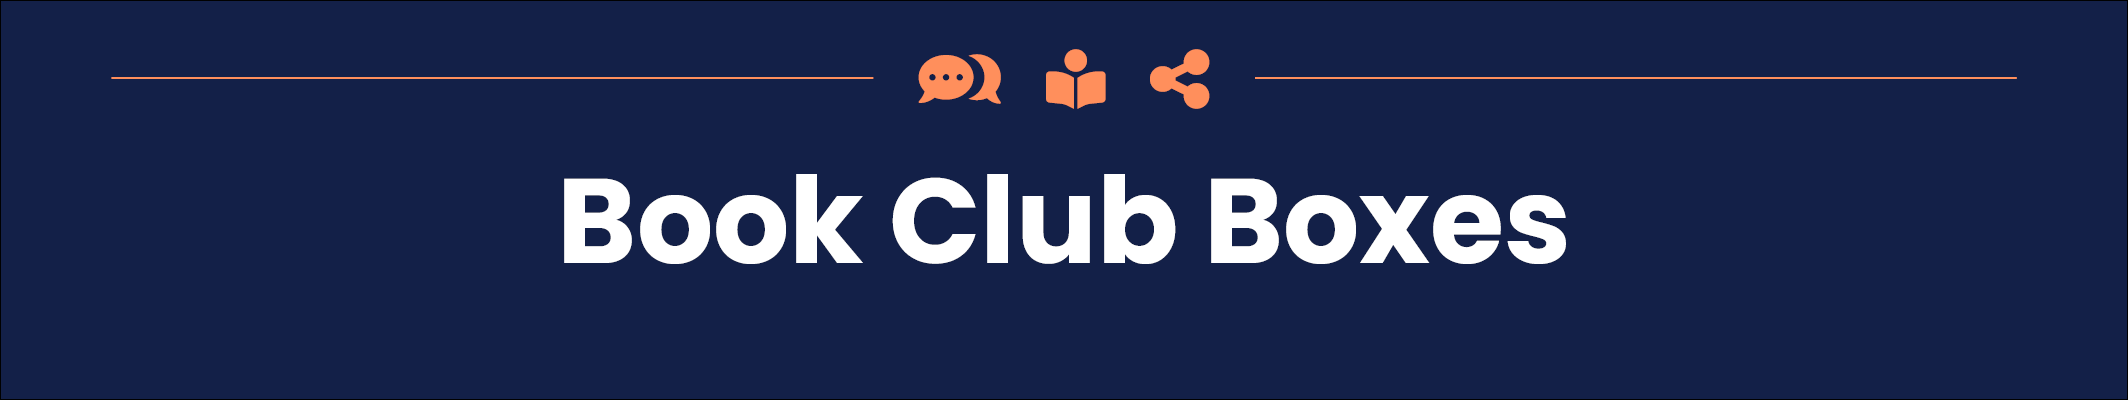 Book Club Boxes